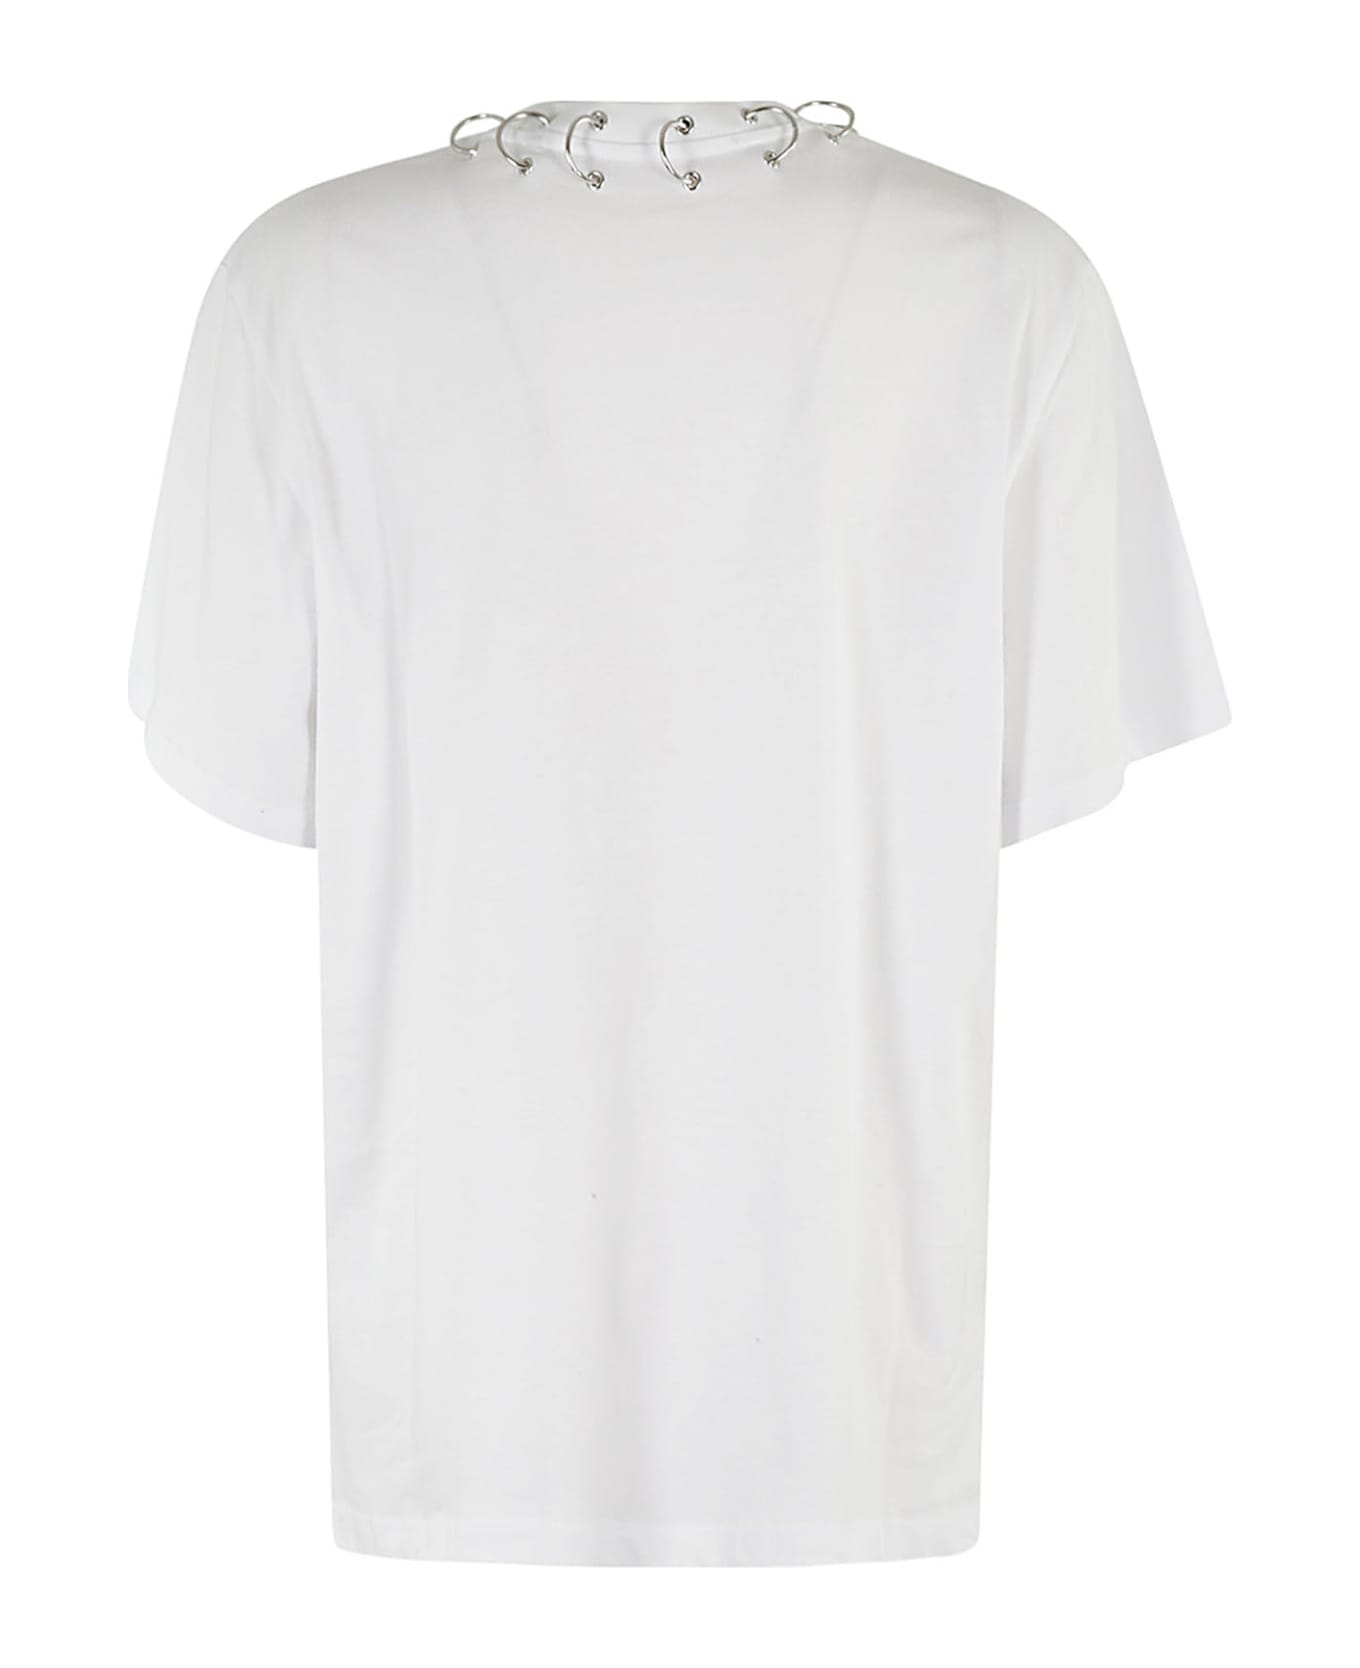 Rotate by Birger Christensen 'oversize Ring' Cotton T-shirt - WHITE Tシャツ